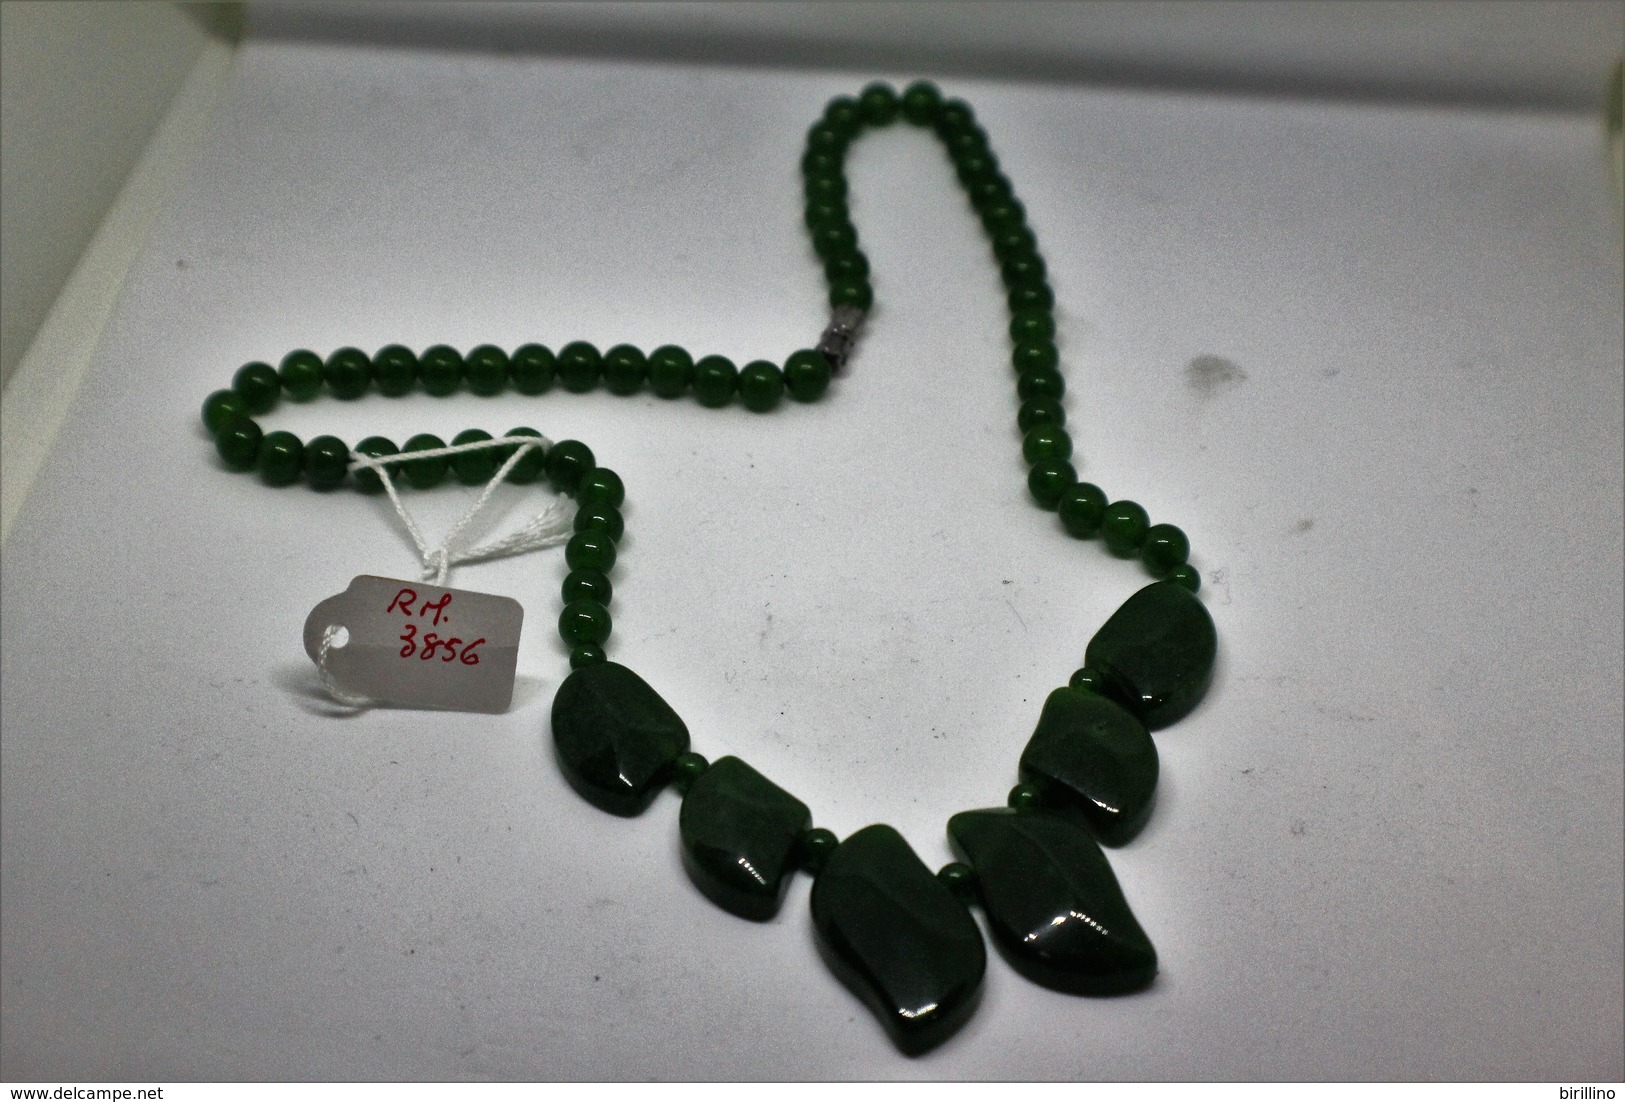 3856 - Collana Di Giada Naturale (serpentino New Jade) Lucidata A Mano. Peso Totale 44 Gr. - Oosterse Kunst